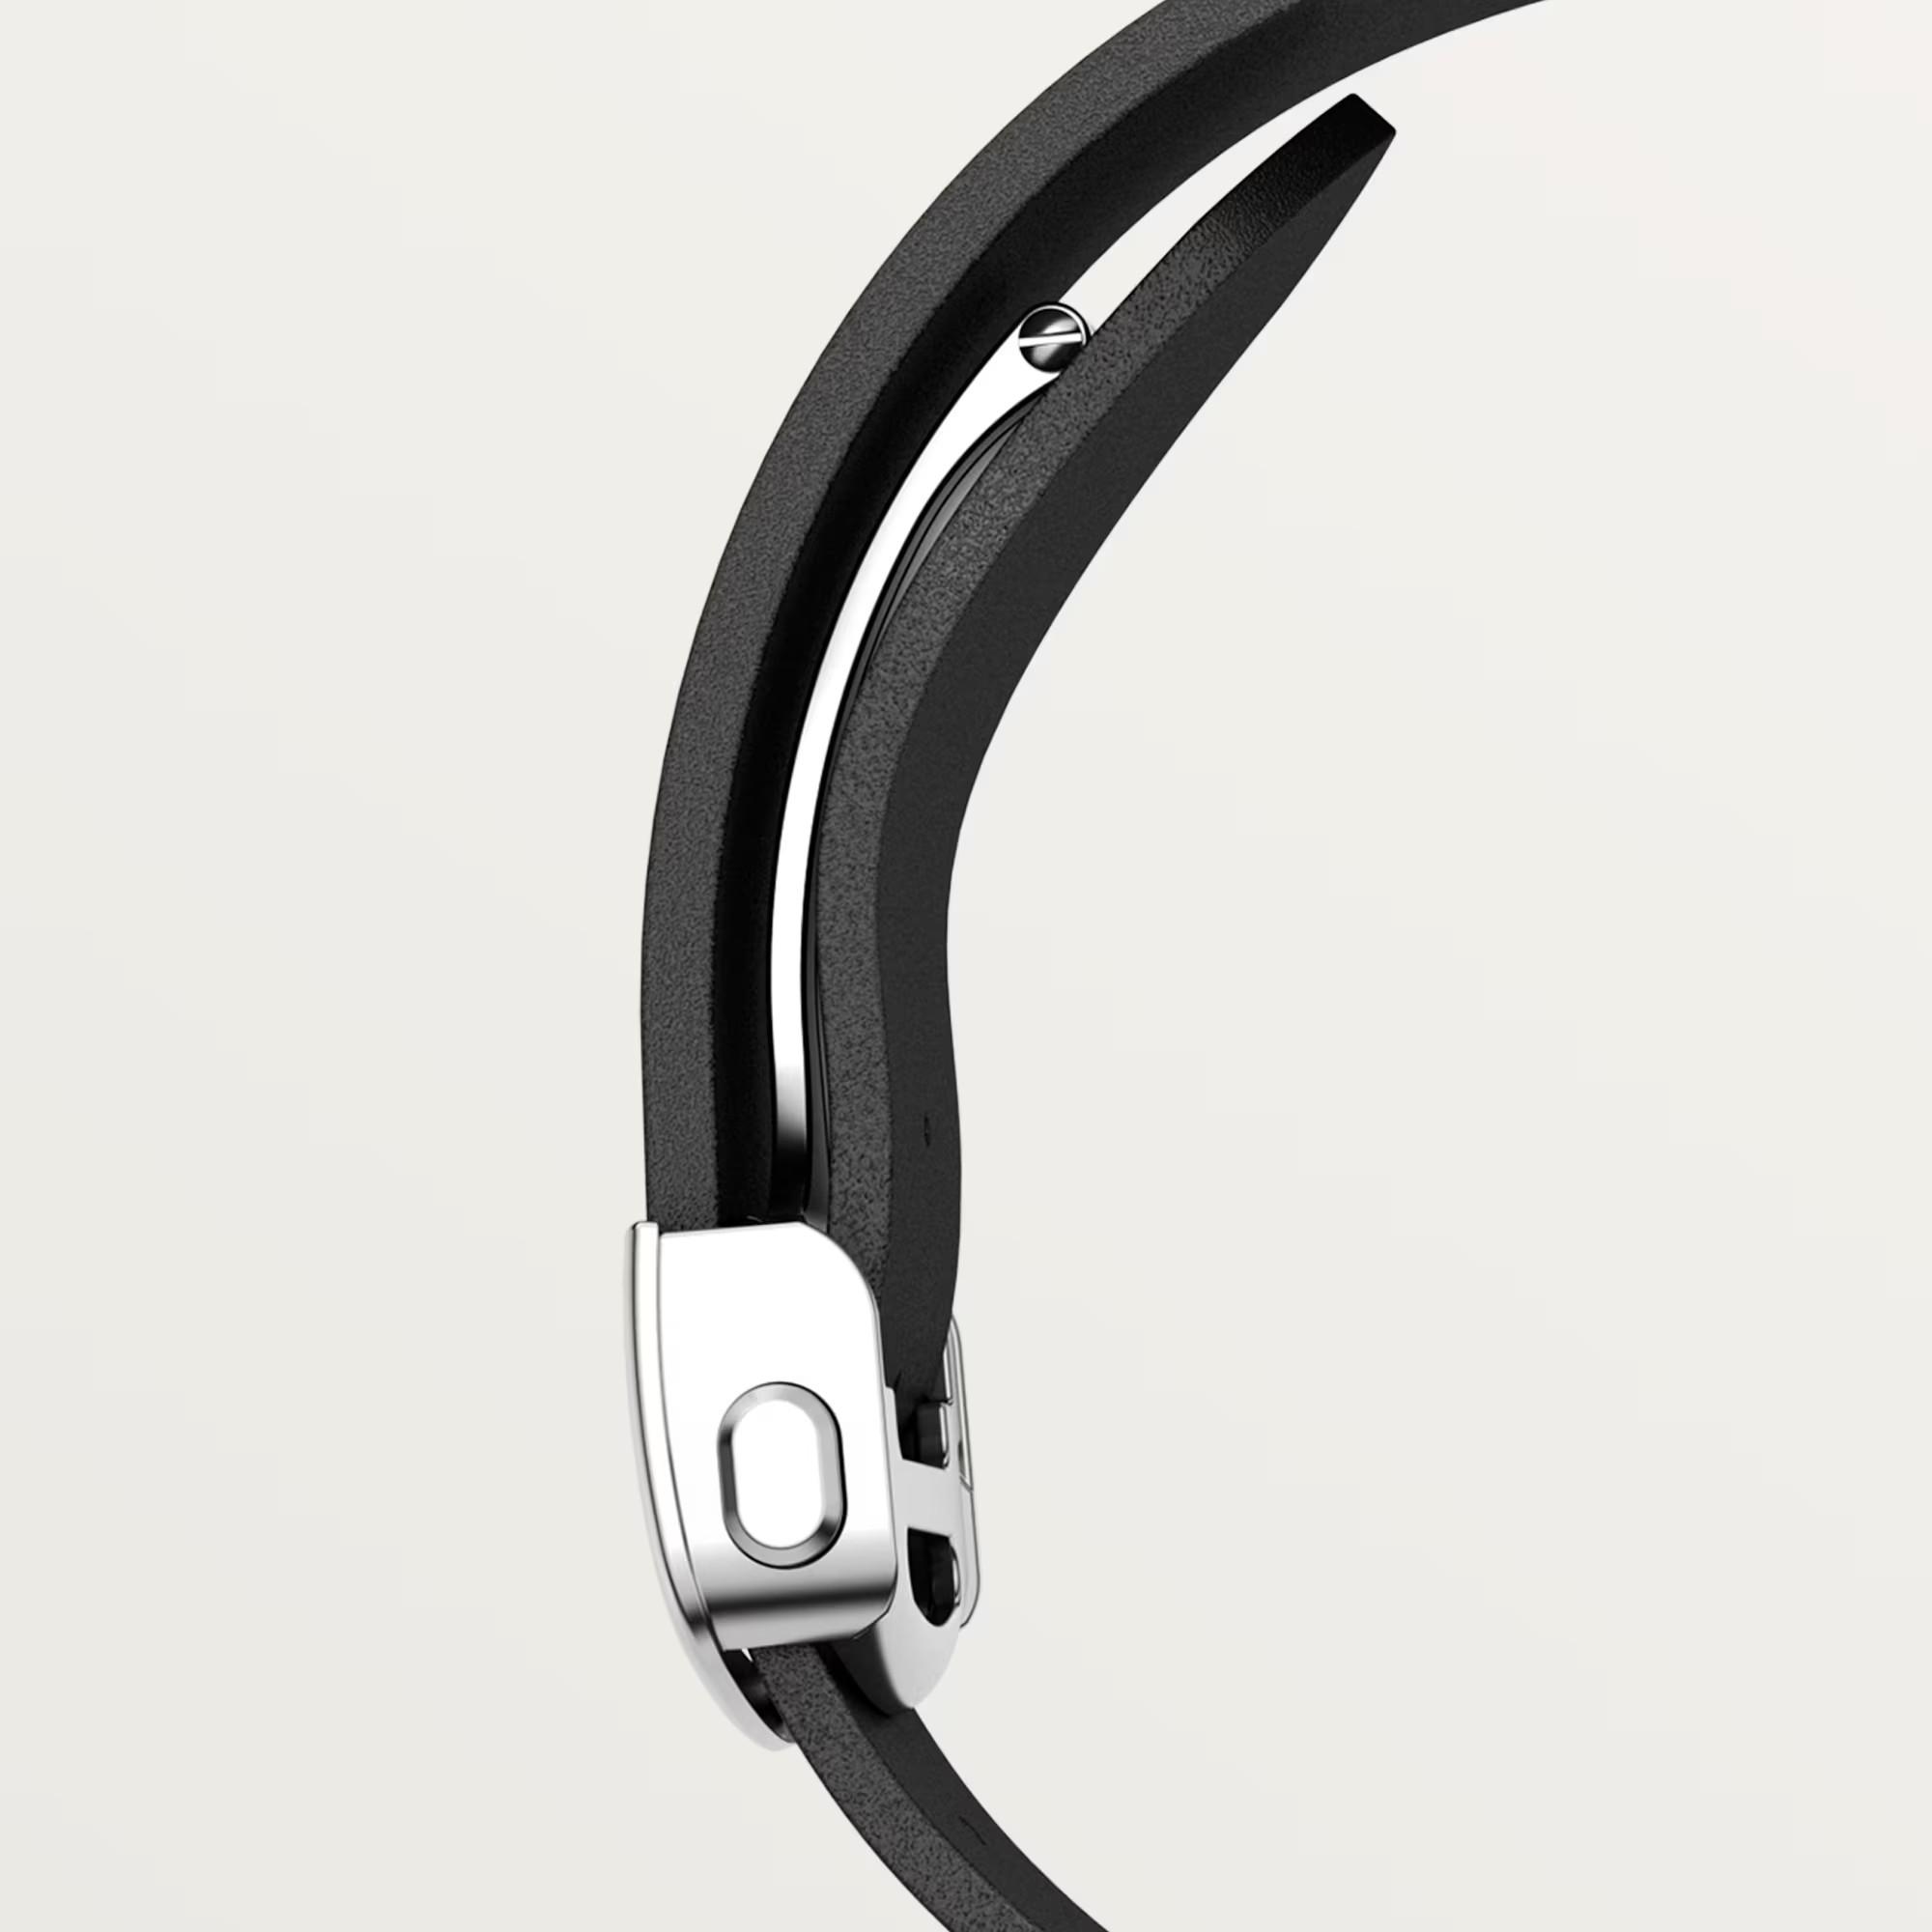 Santos de Cartier Chronograph Watch in Black, extra large model 6